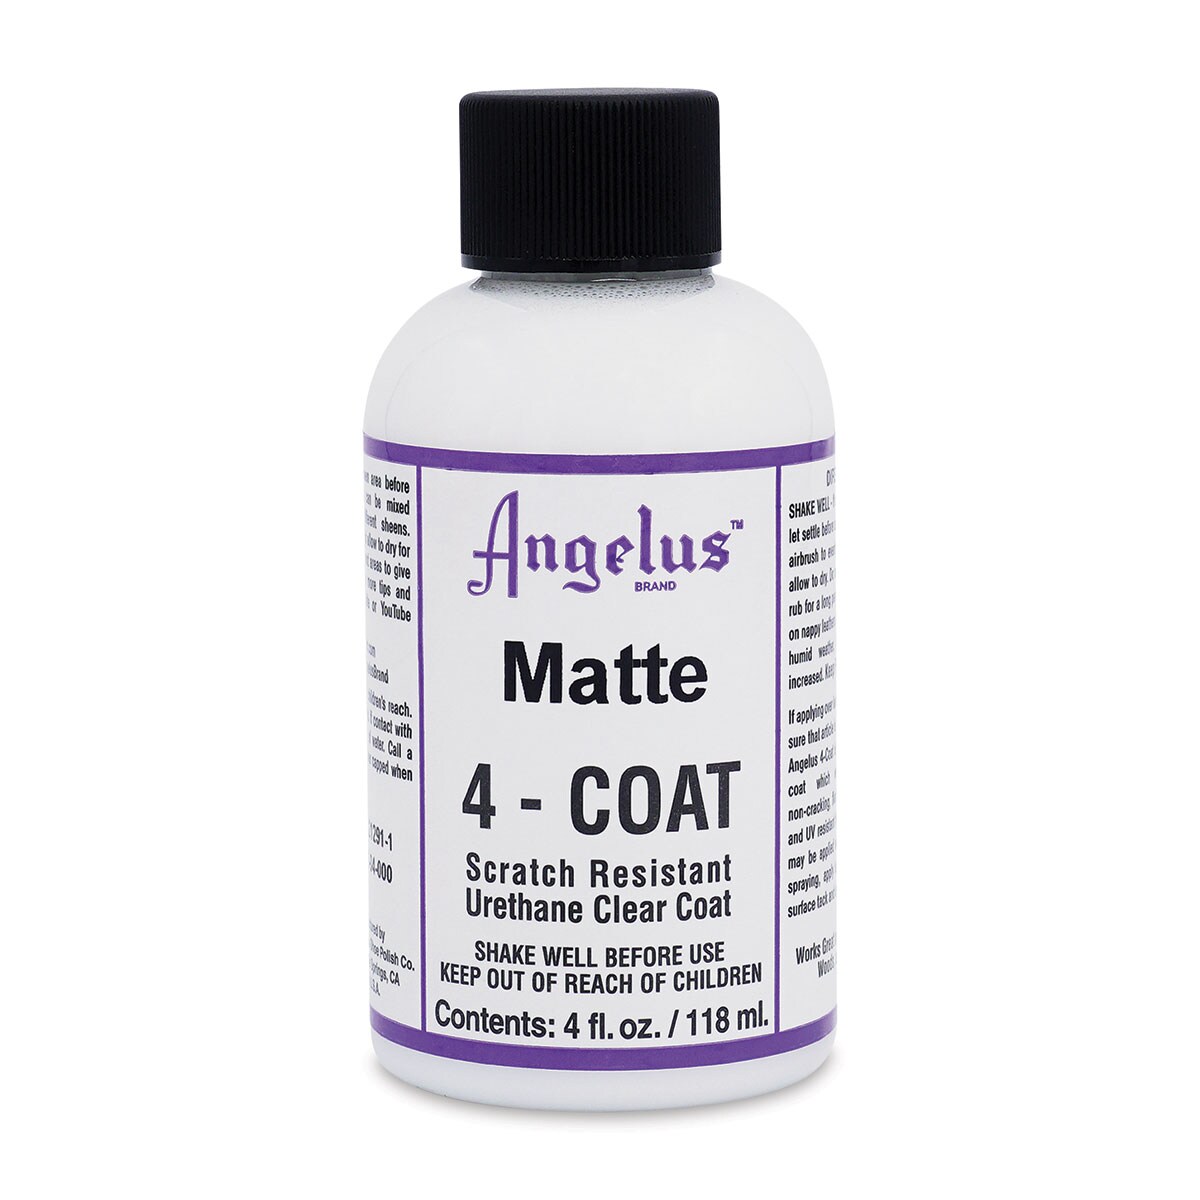 Angelus 4-Coat Urethane Clear Coat - Matte, 4 oz, Bottle